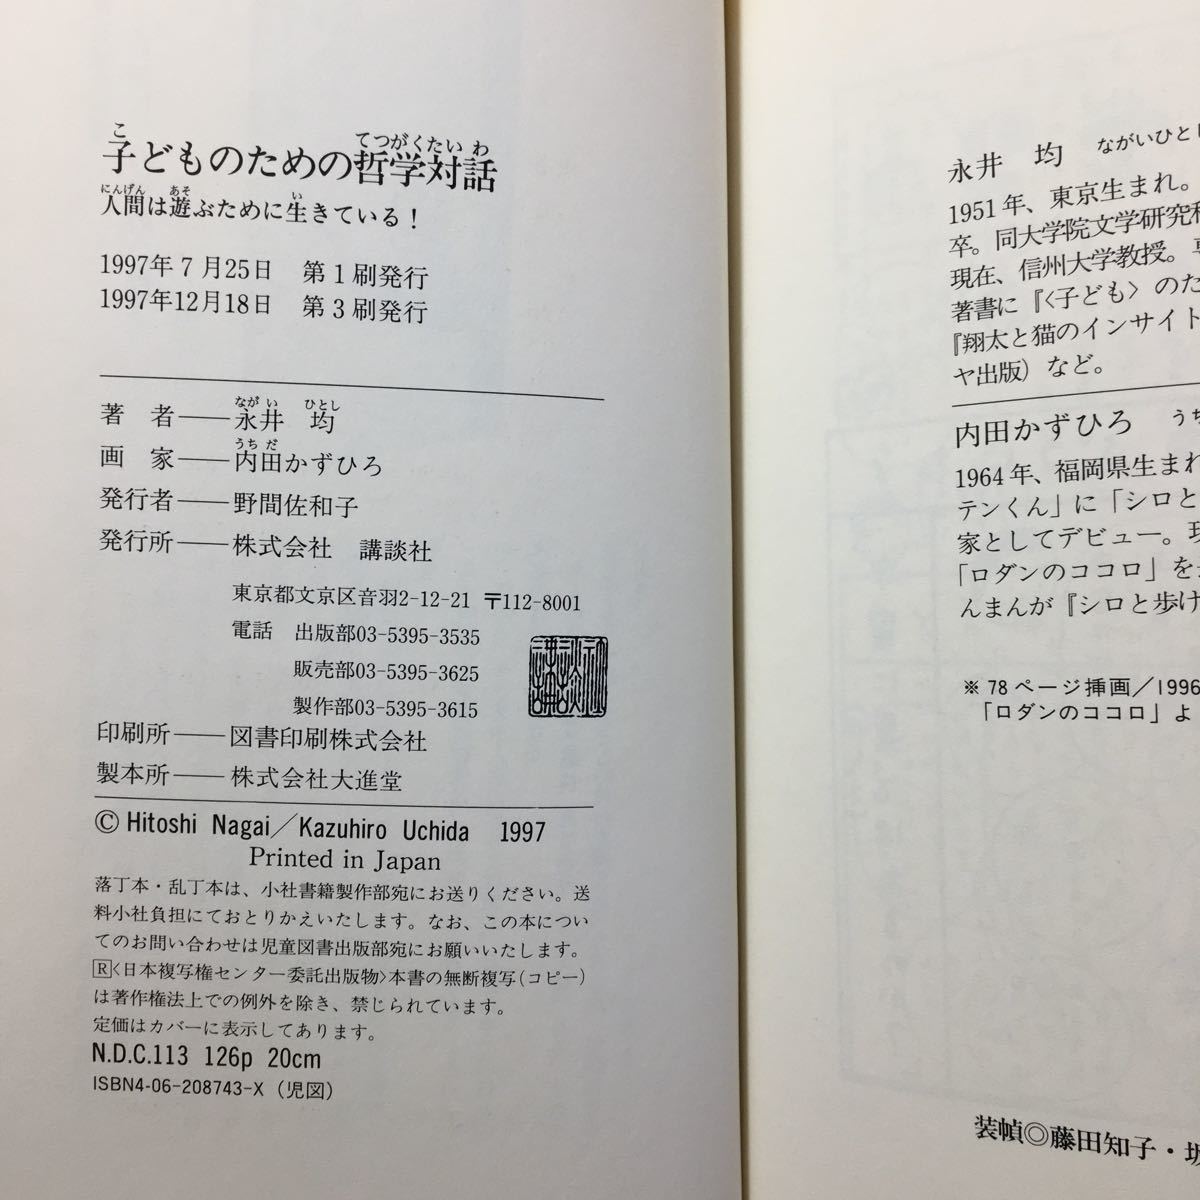 zaa-125♪子どものための哲学対話 (日本語) 単行本 1997/7/23 永井 均 (著), 内田 かずひろ (著)